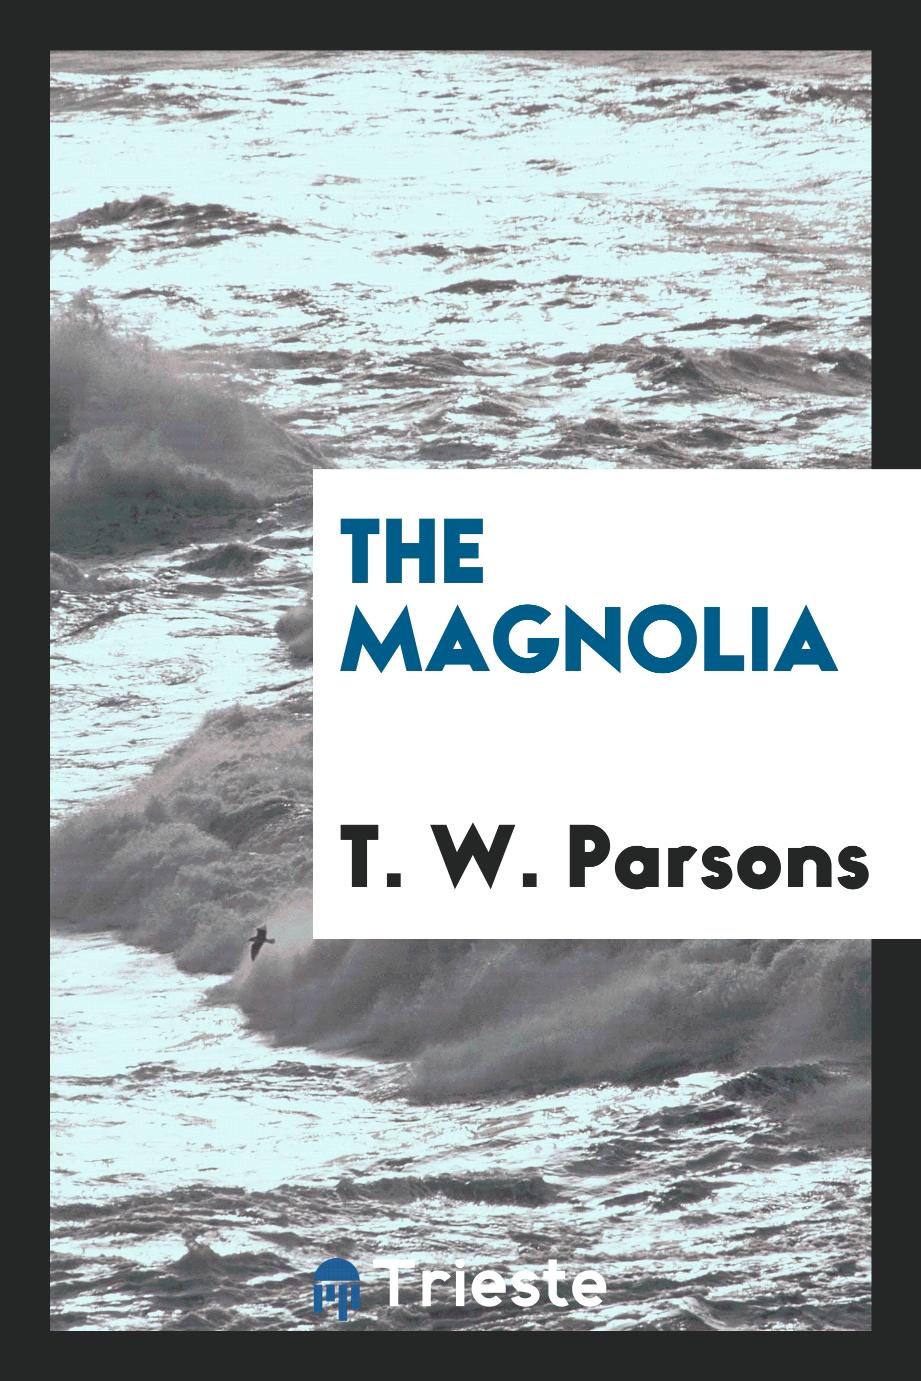 The magnolia